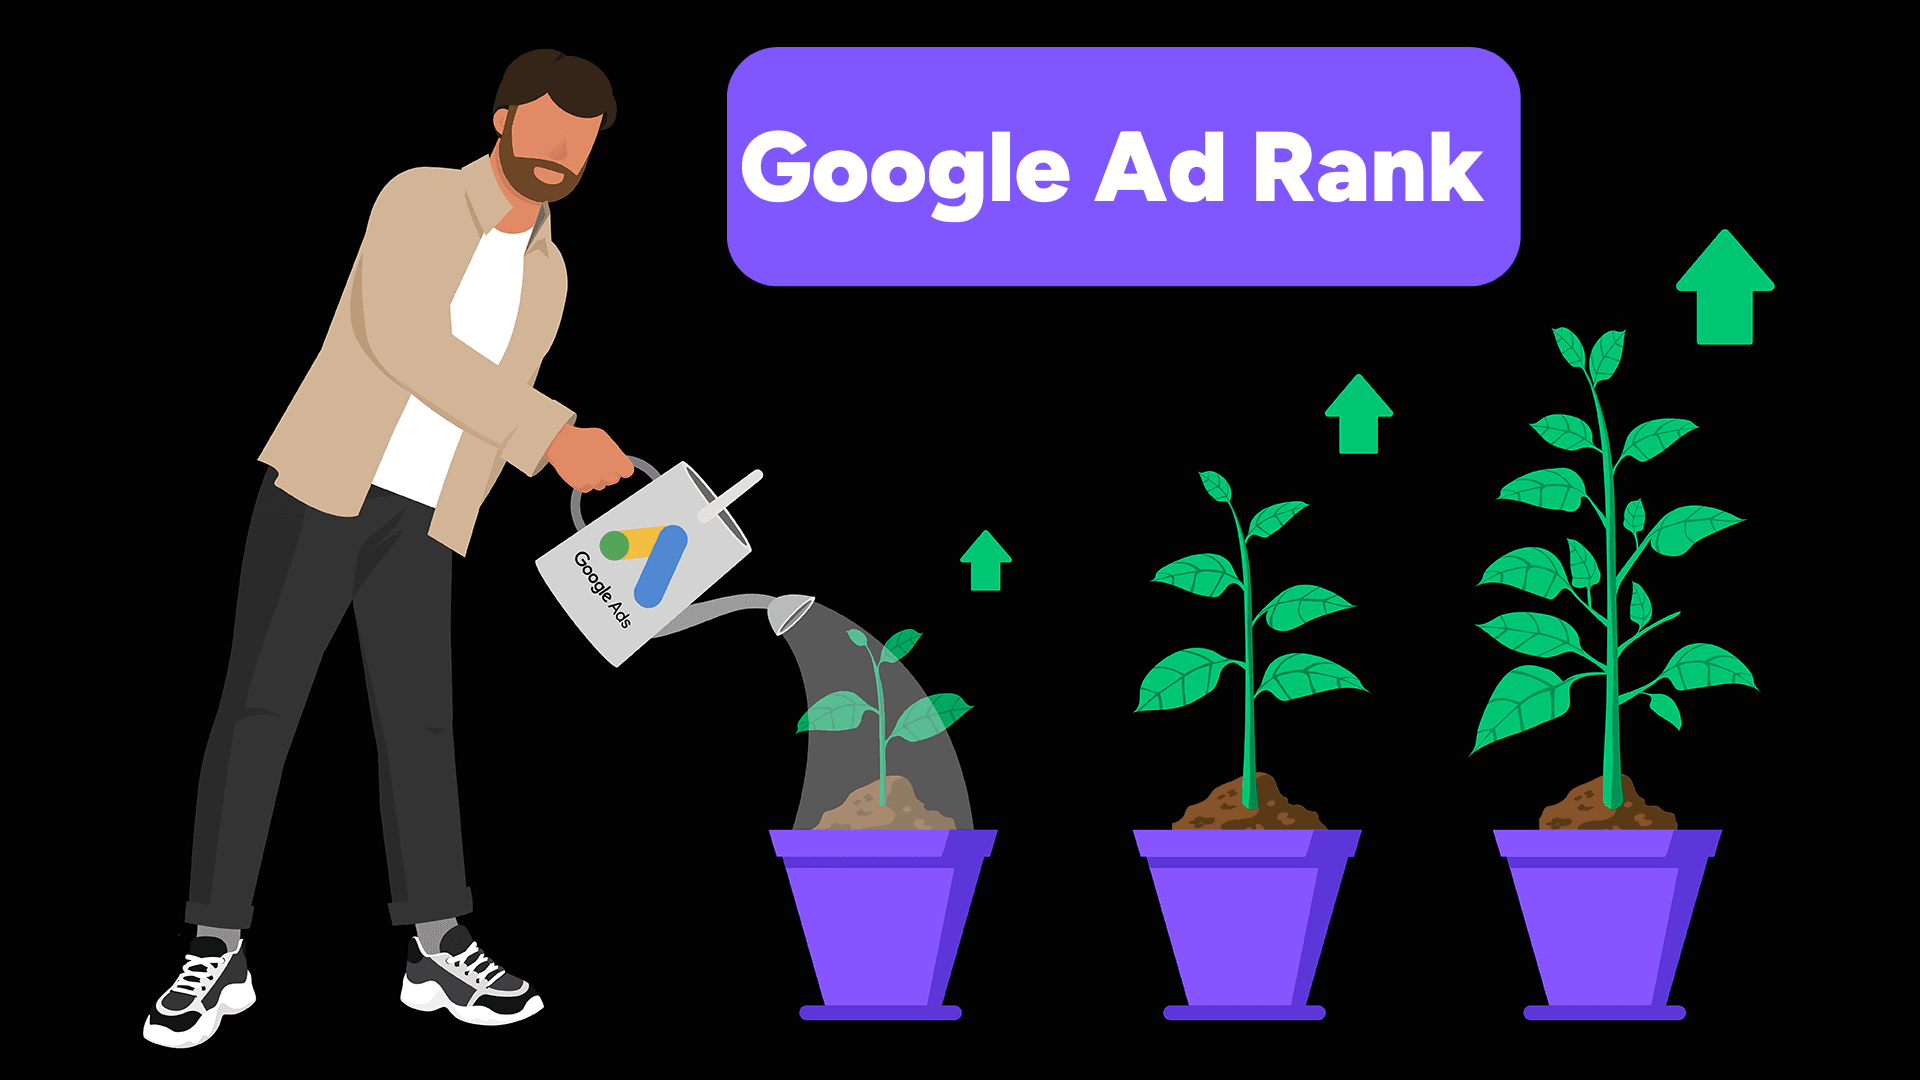 Google ad rank